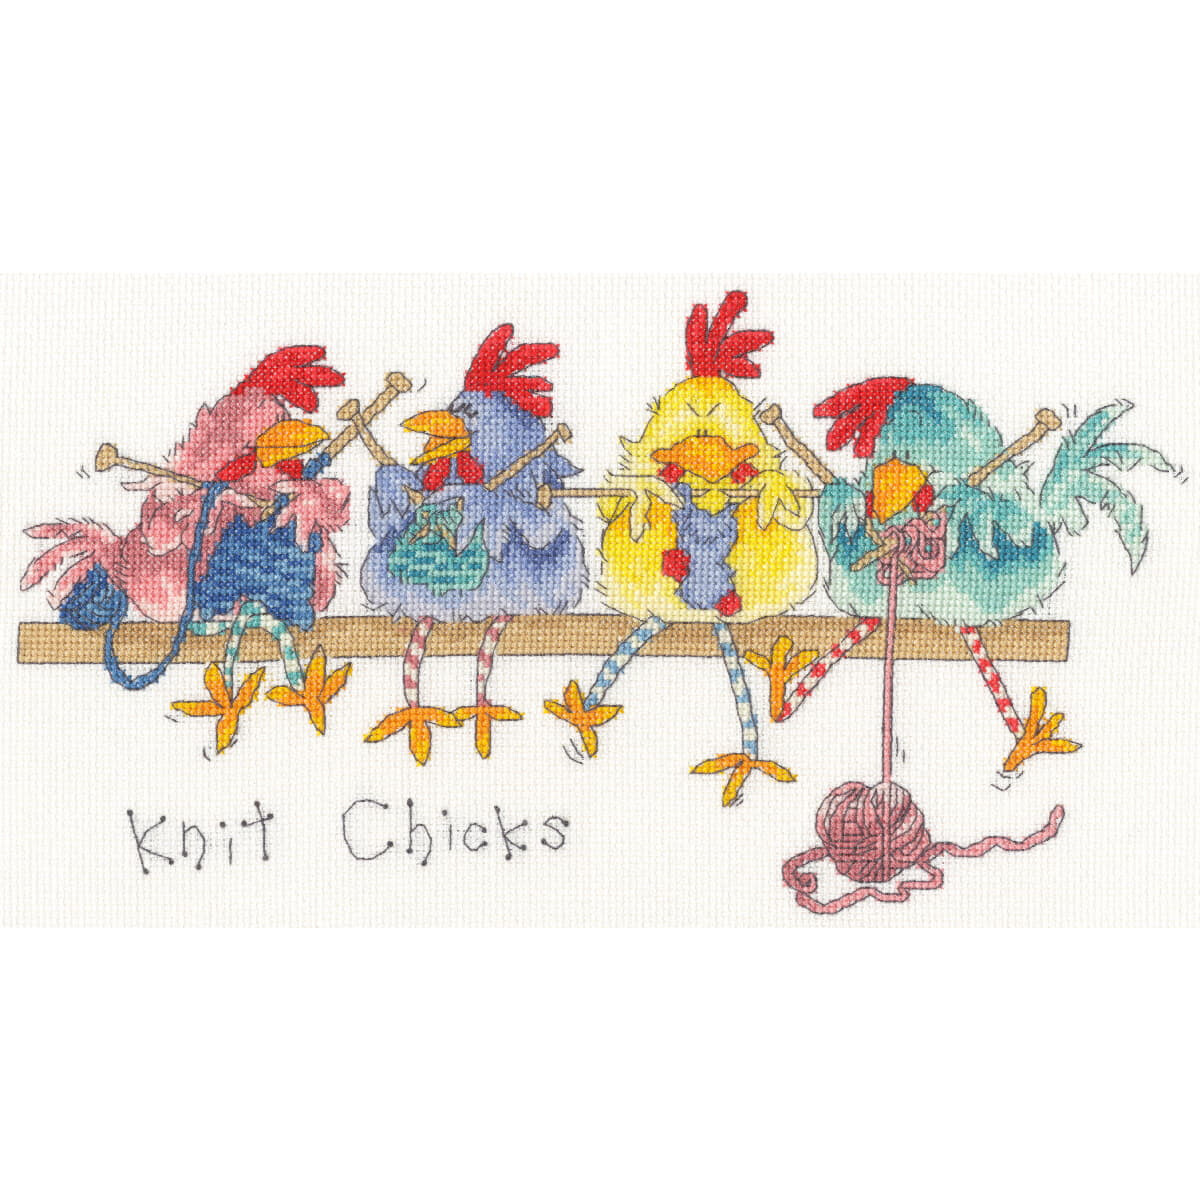 Immagine illustrata di quattro galline colorate sedute su...